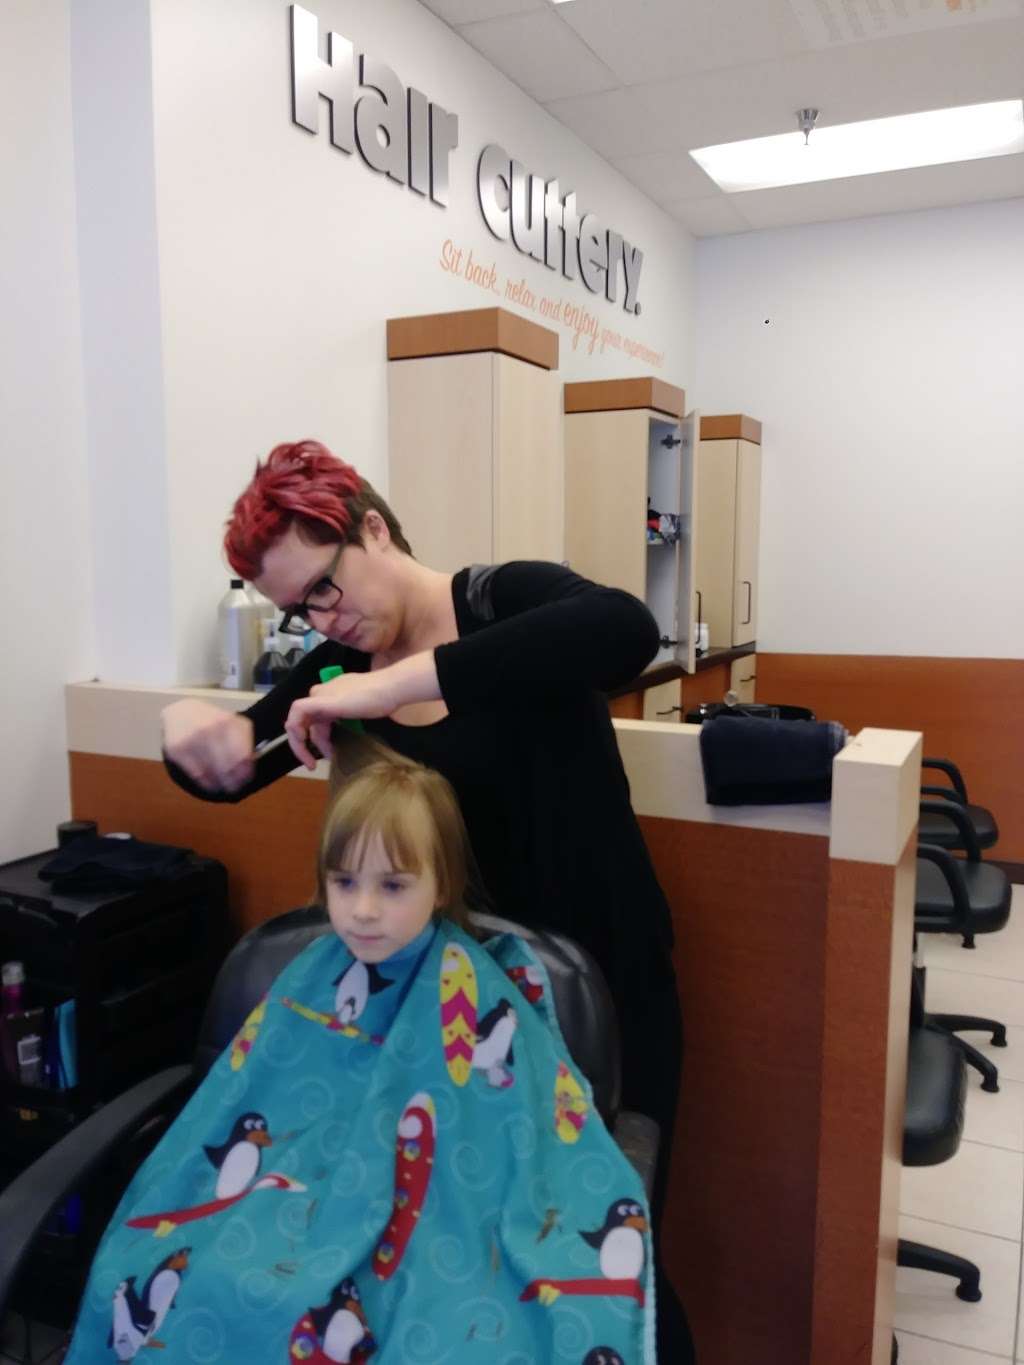 Hair Cuttery | 43 Town and Country Dr, Fredericksburg, VA 22405 | Phone: (540) 361-1878